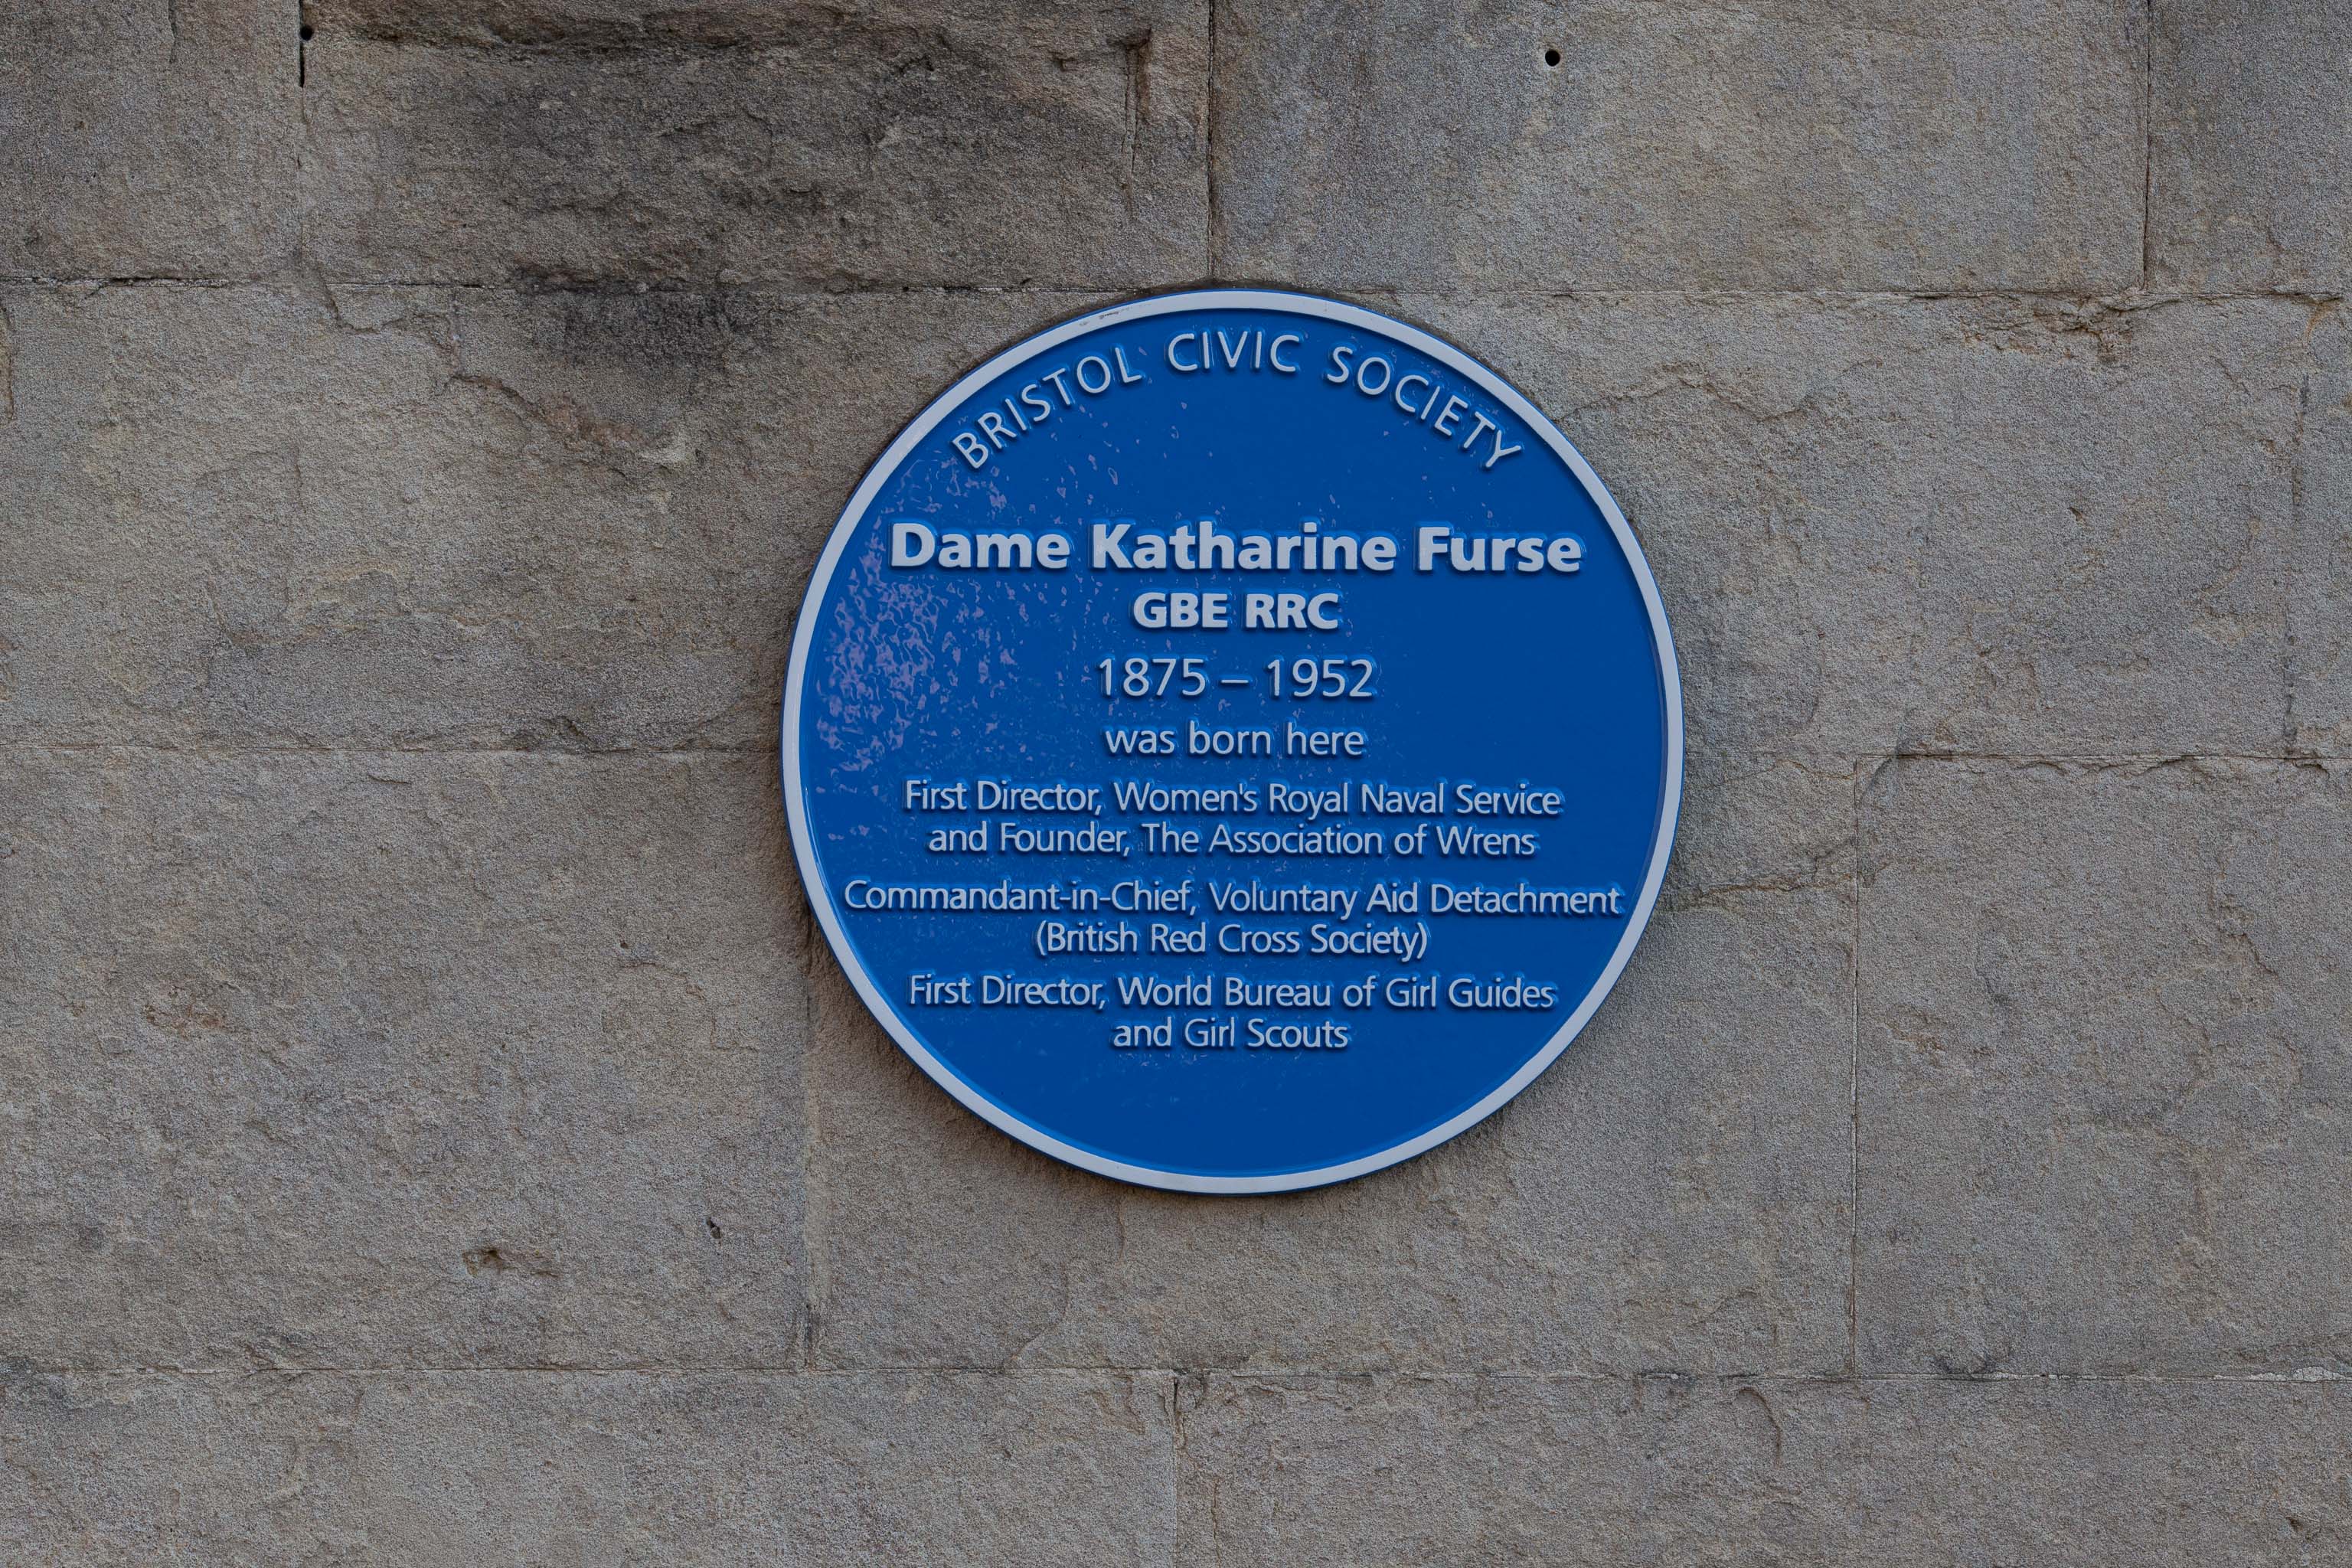 Dame Katharine Furse
Now that's some serious achievement:


  Dame Katharine Furse, GBE, RRC (née Symonds; 23 November 1875 – 25 November 1952) was a British nursing an...